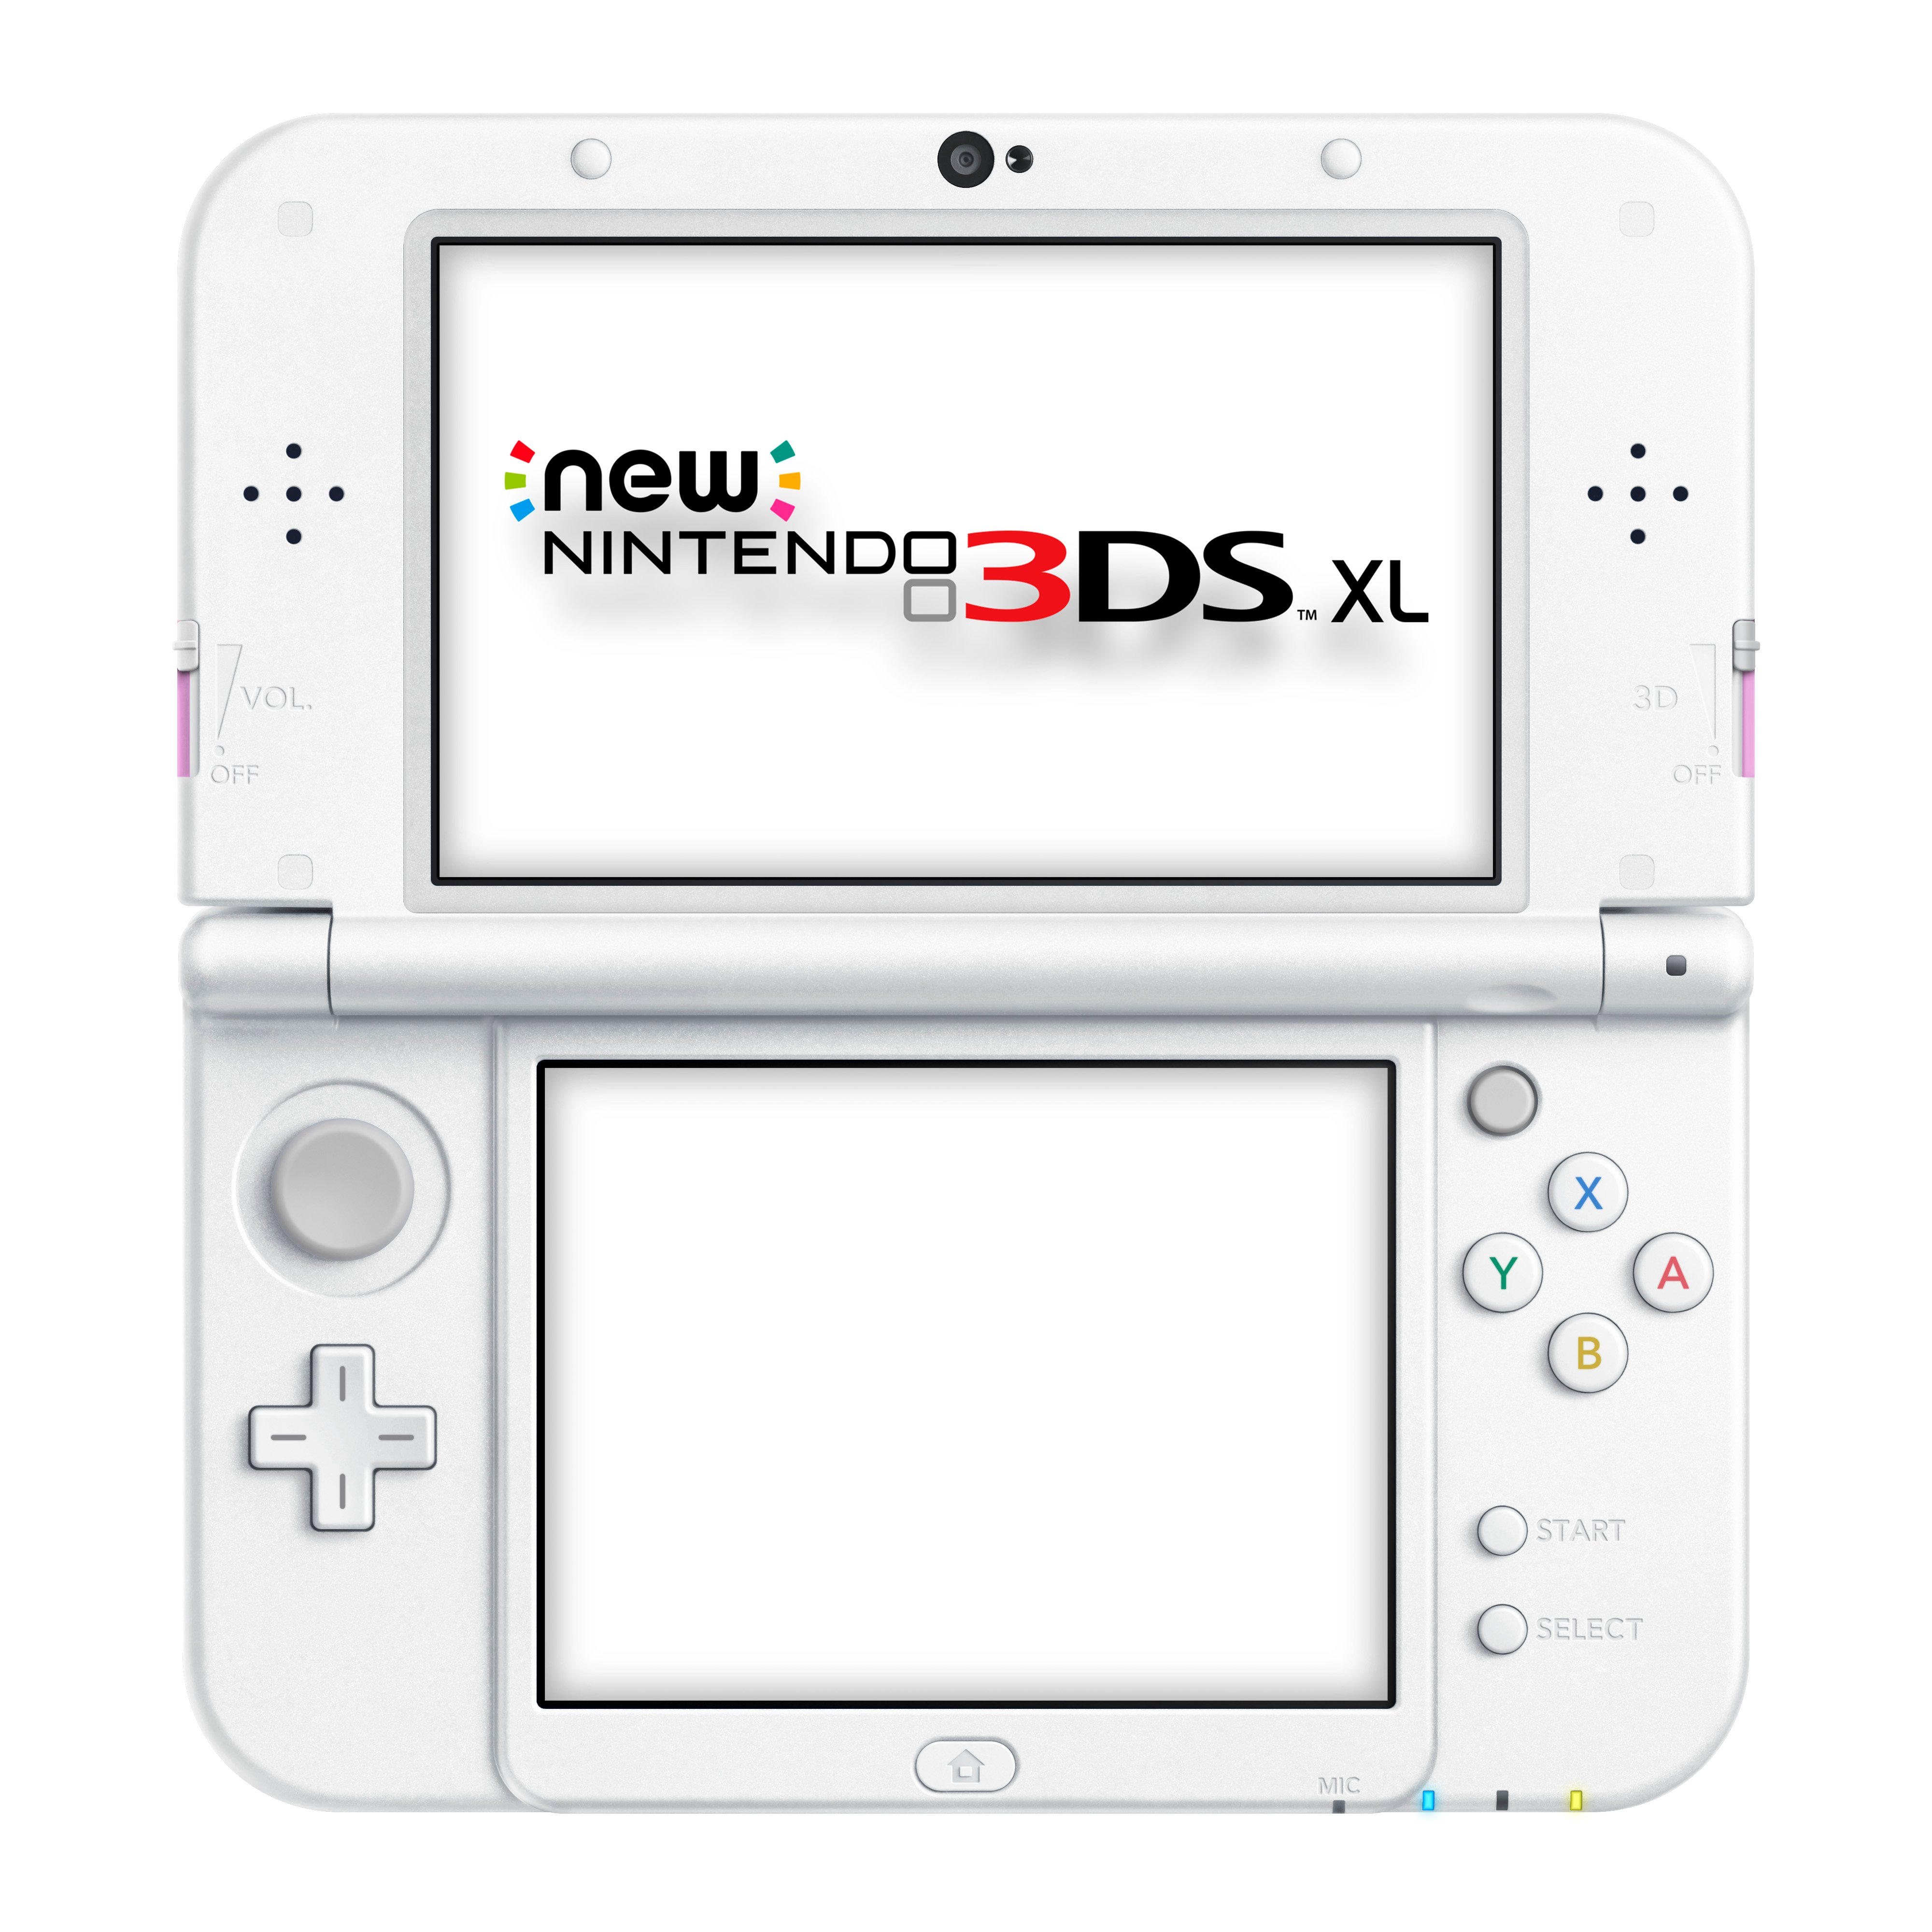 Consola New Nintendo 3ds xl rosa pantalla 4.88